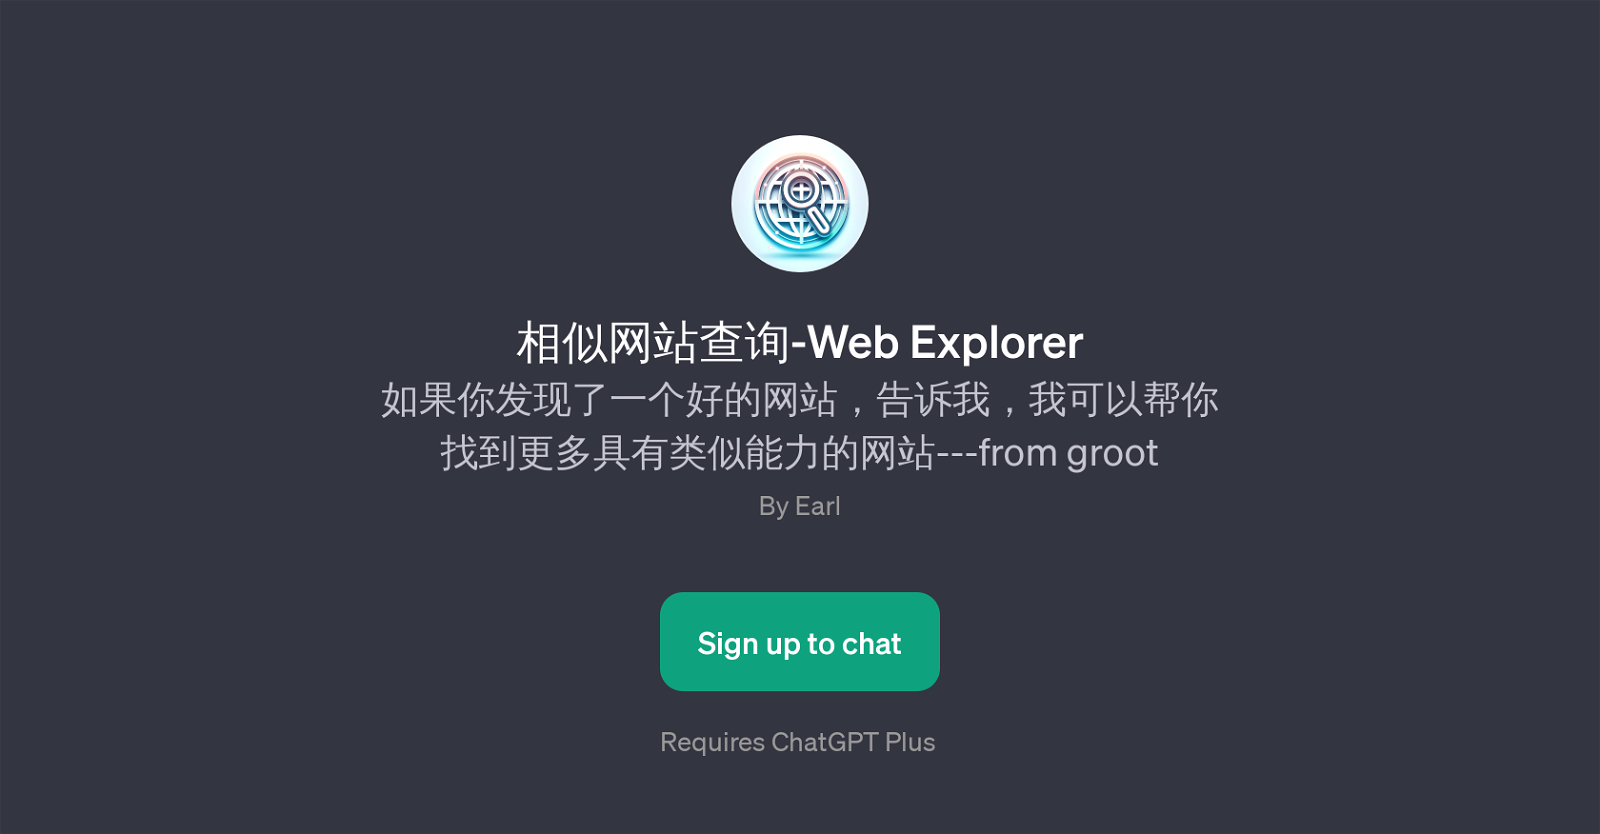 -Web Explorer website